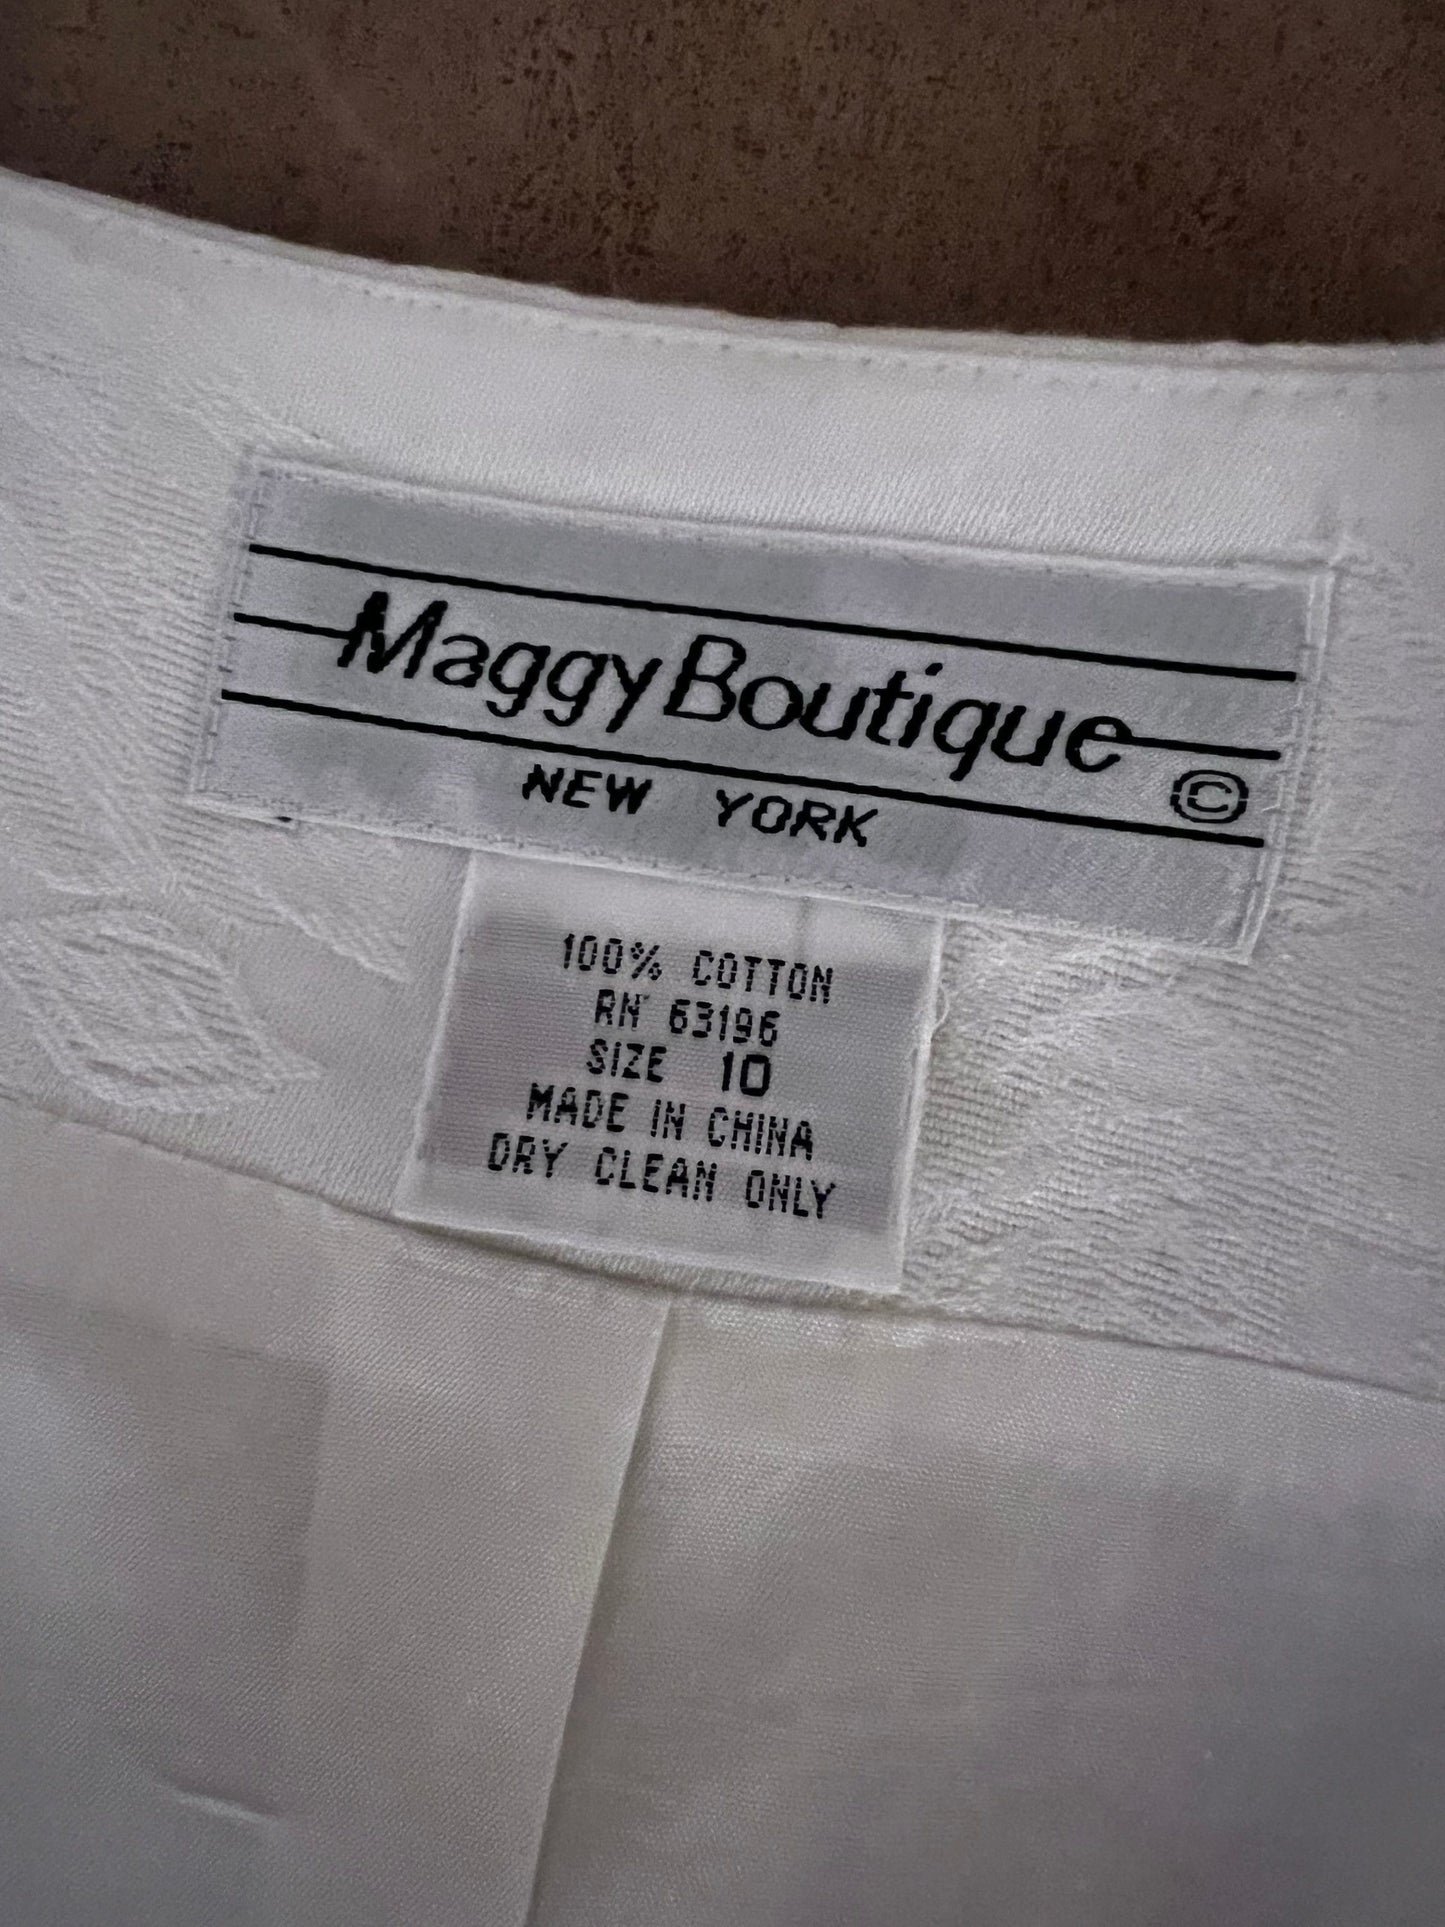 White Suit Brocade Vintage Suit 1980s Skirt Suit - Skirt and longline blazer Size 10 Cotton